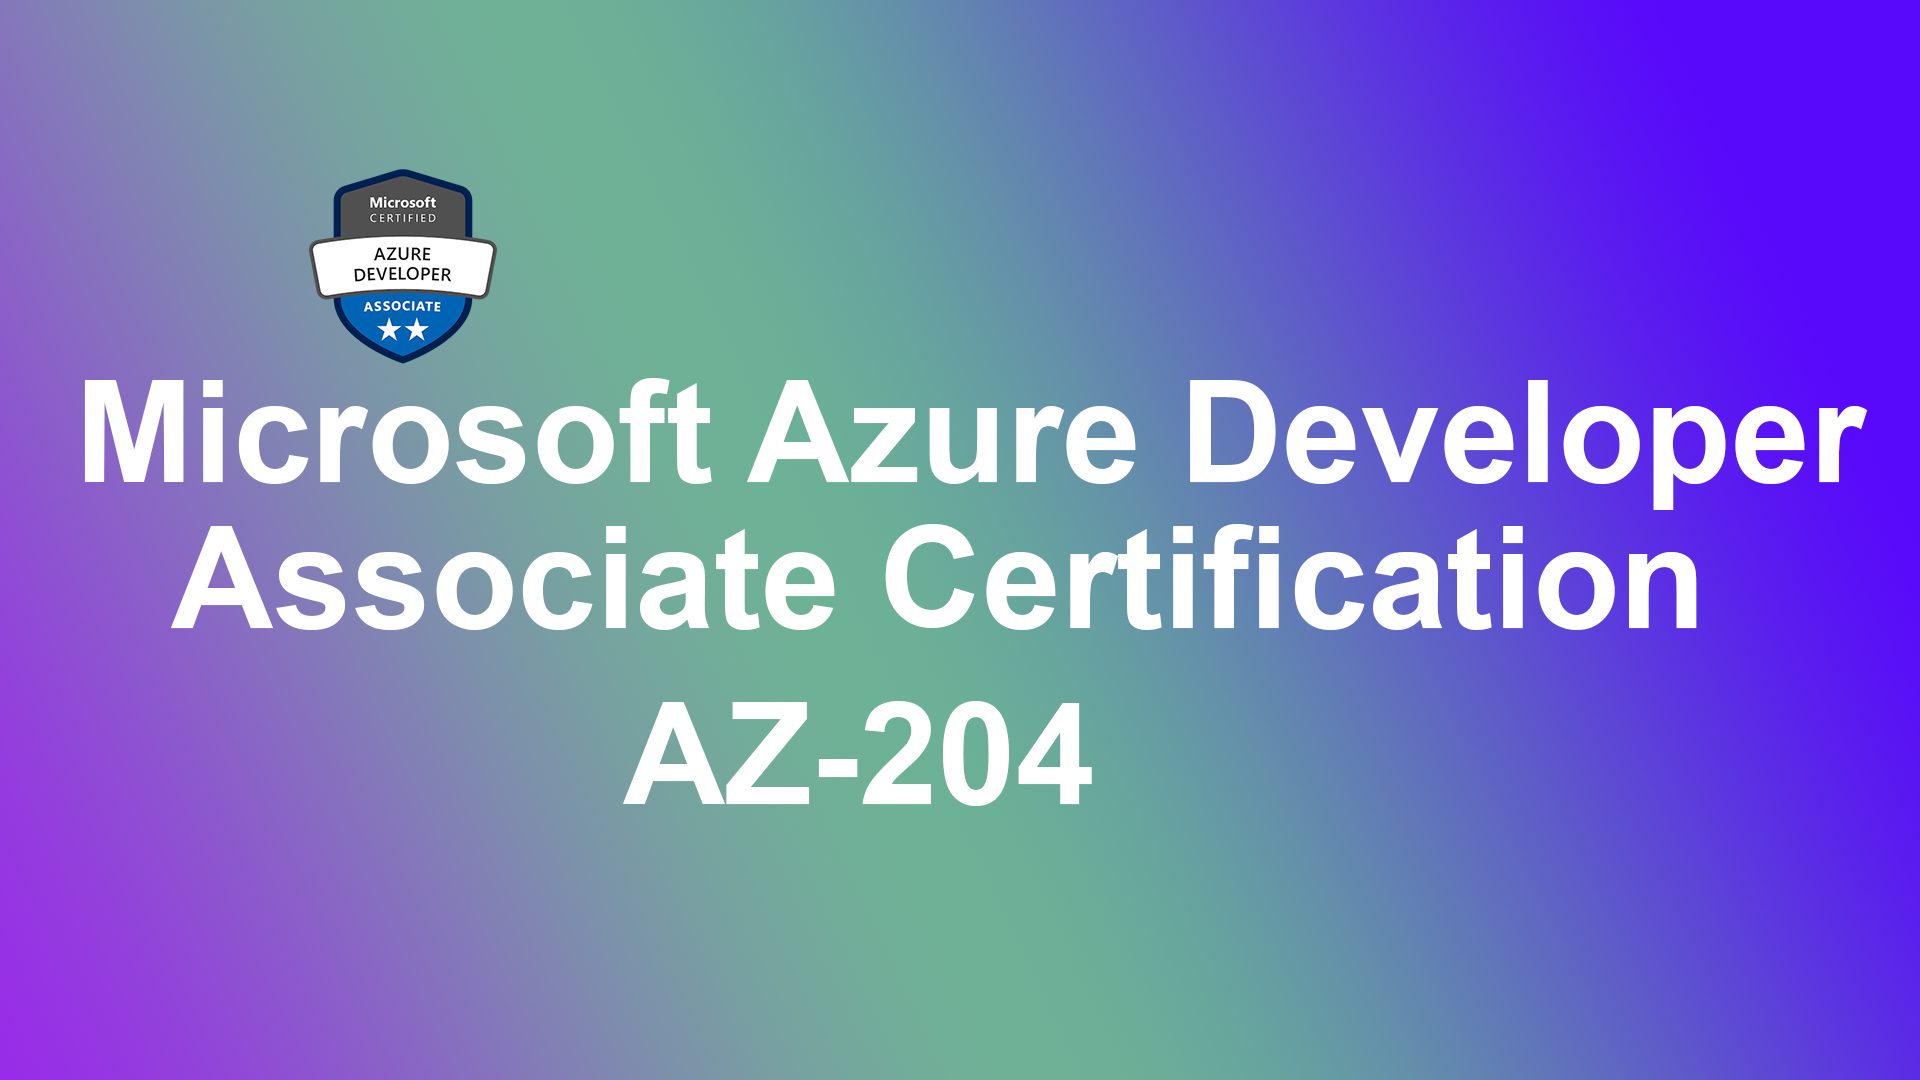 Microsoft Azure Developer Associate Certification Course AZ-204